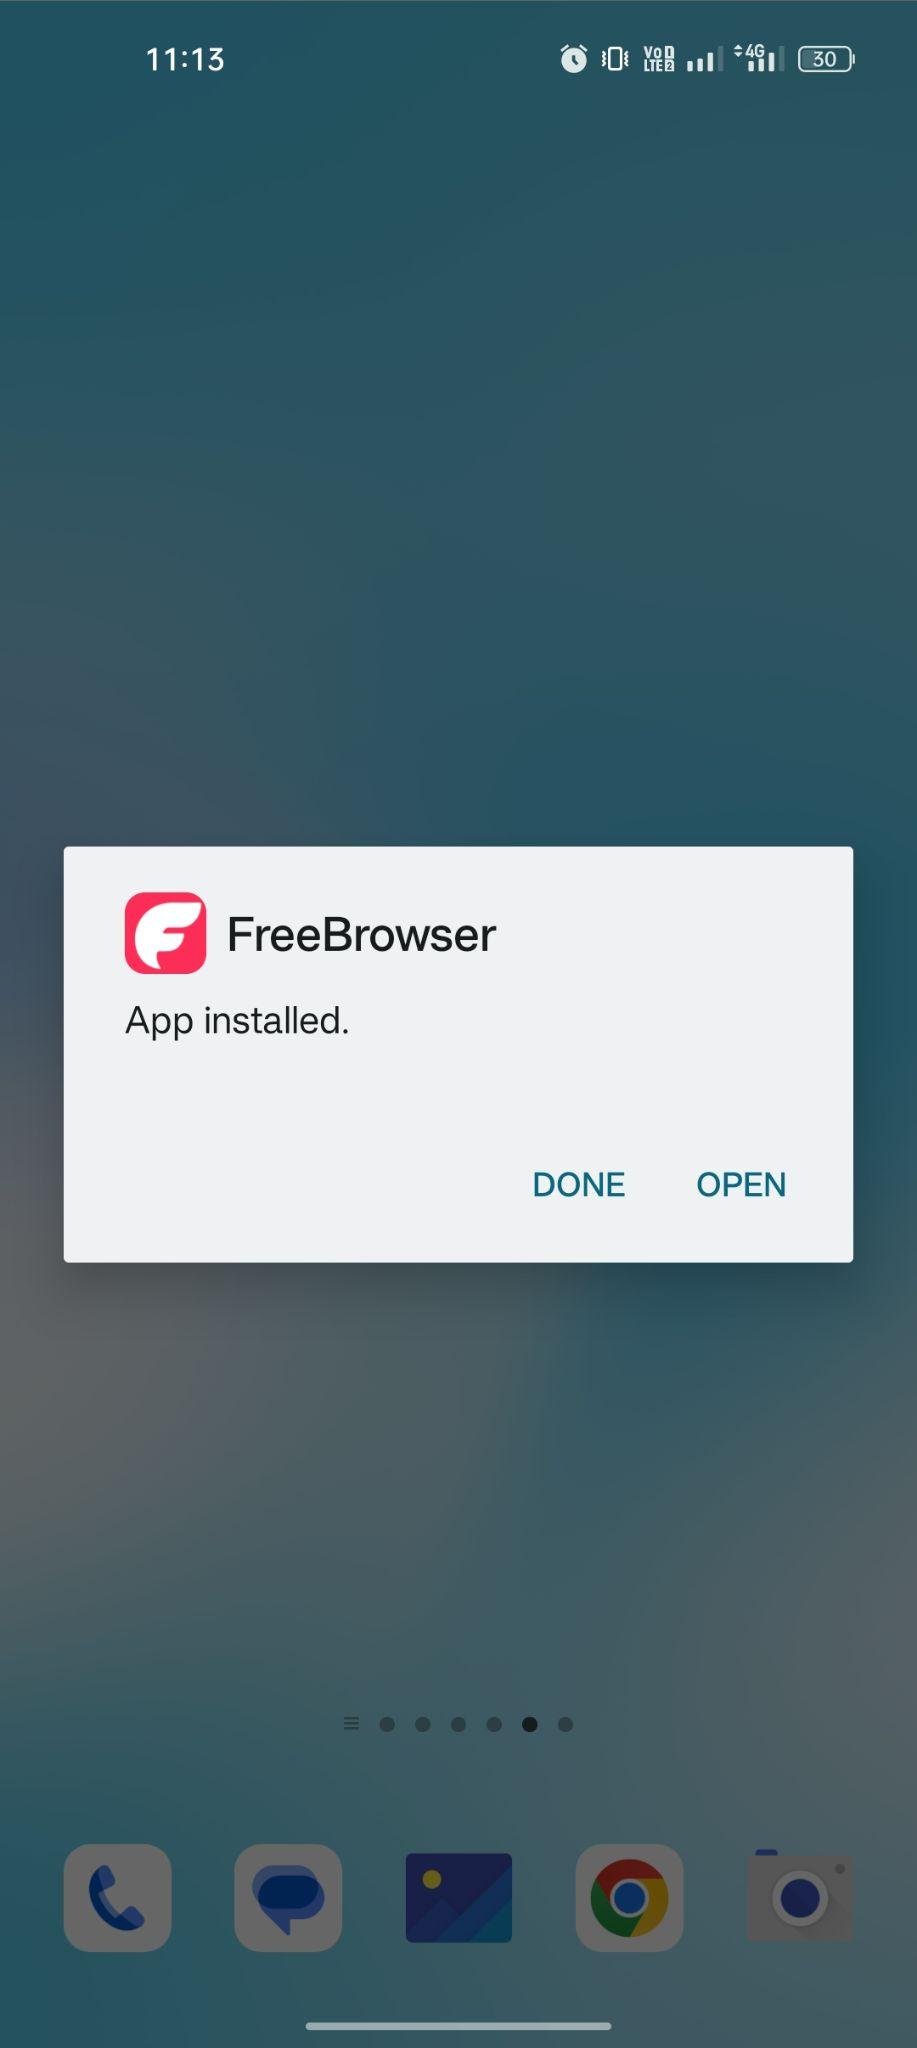 FreeBrowser apk installed